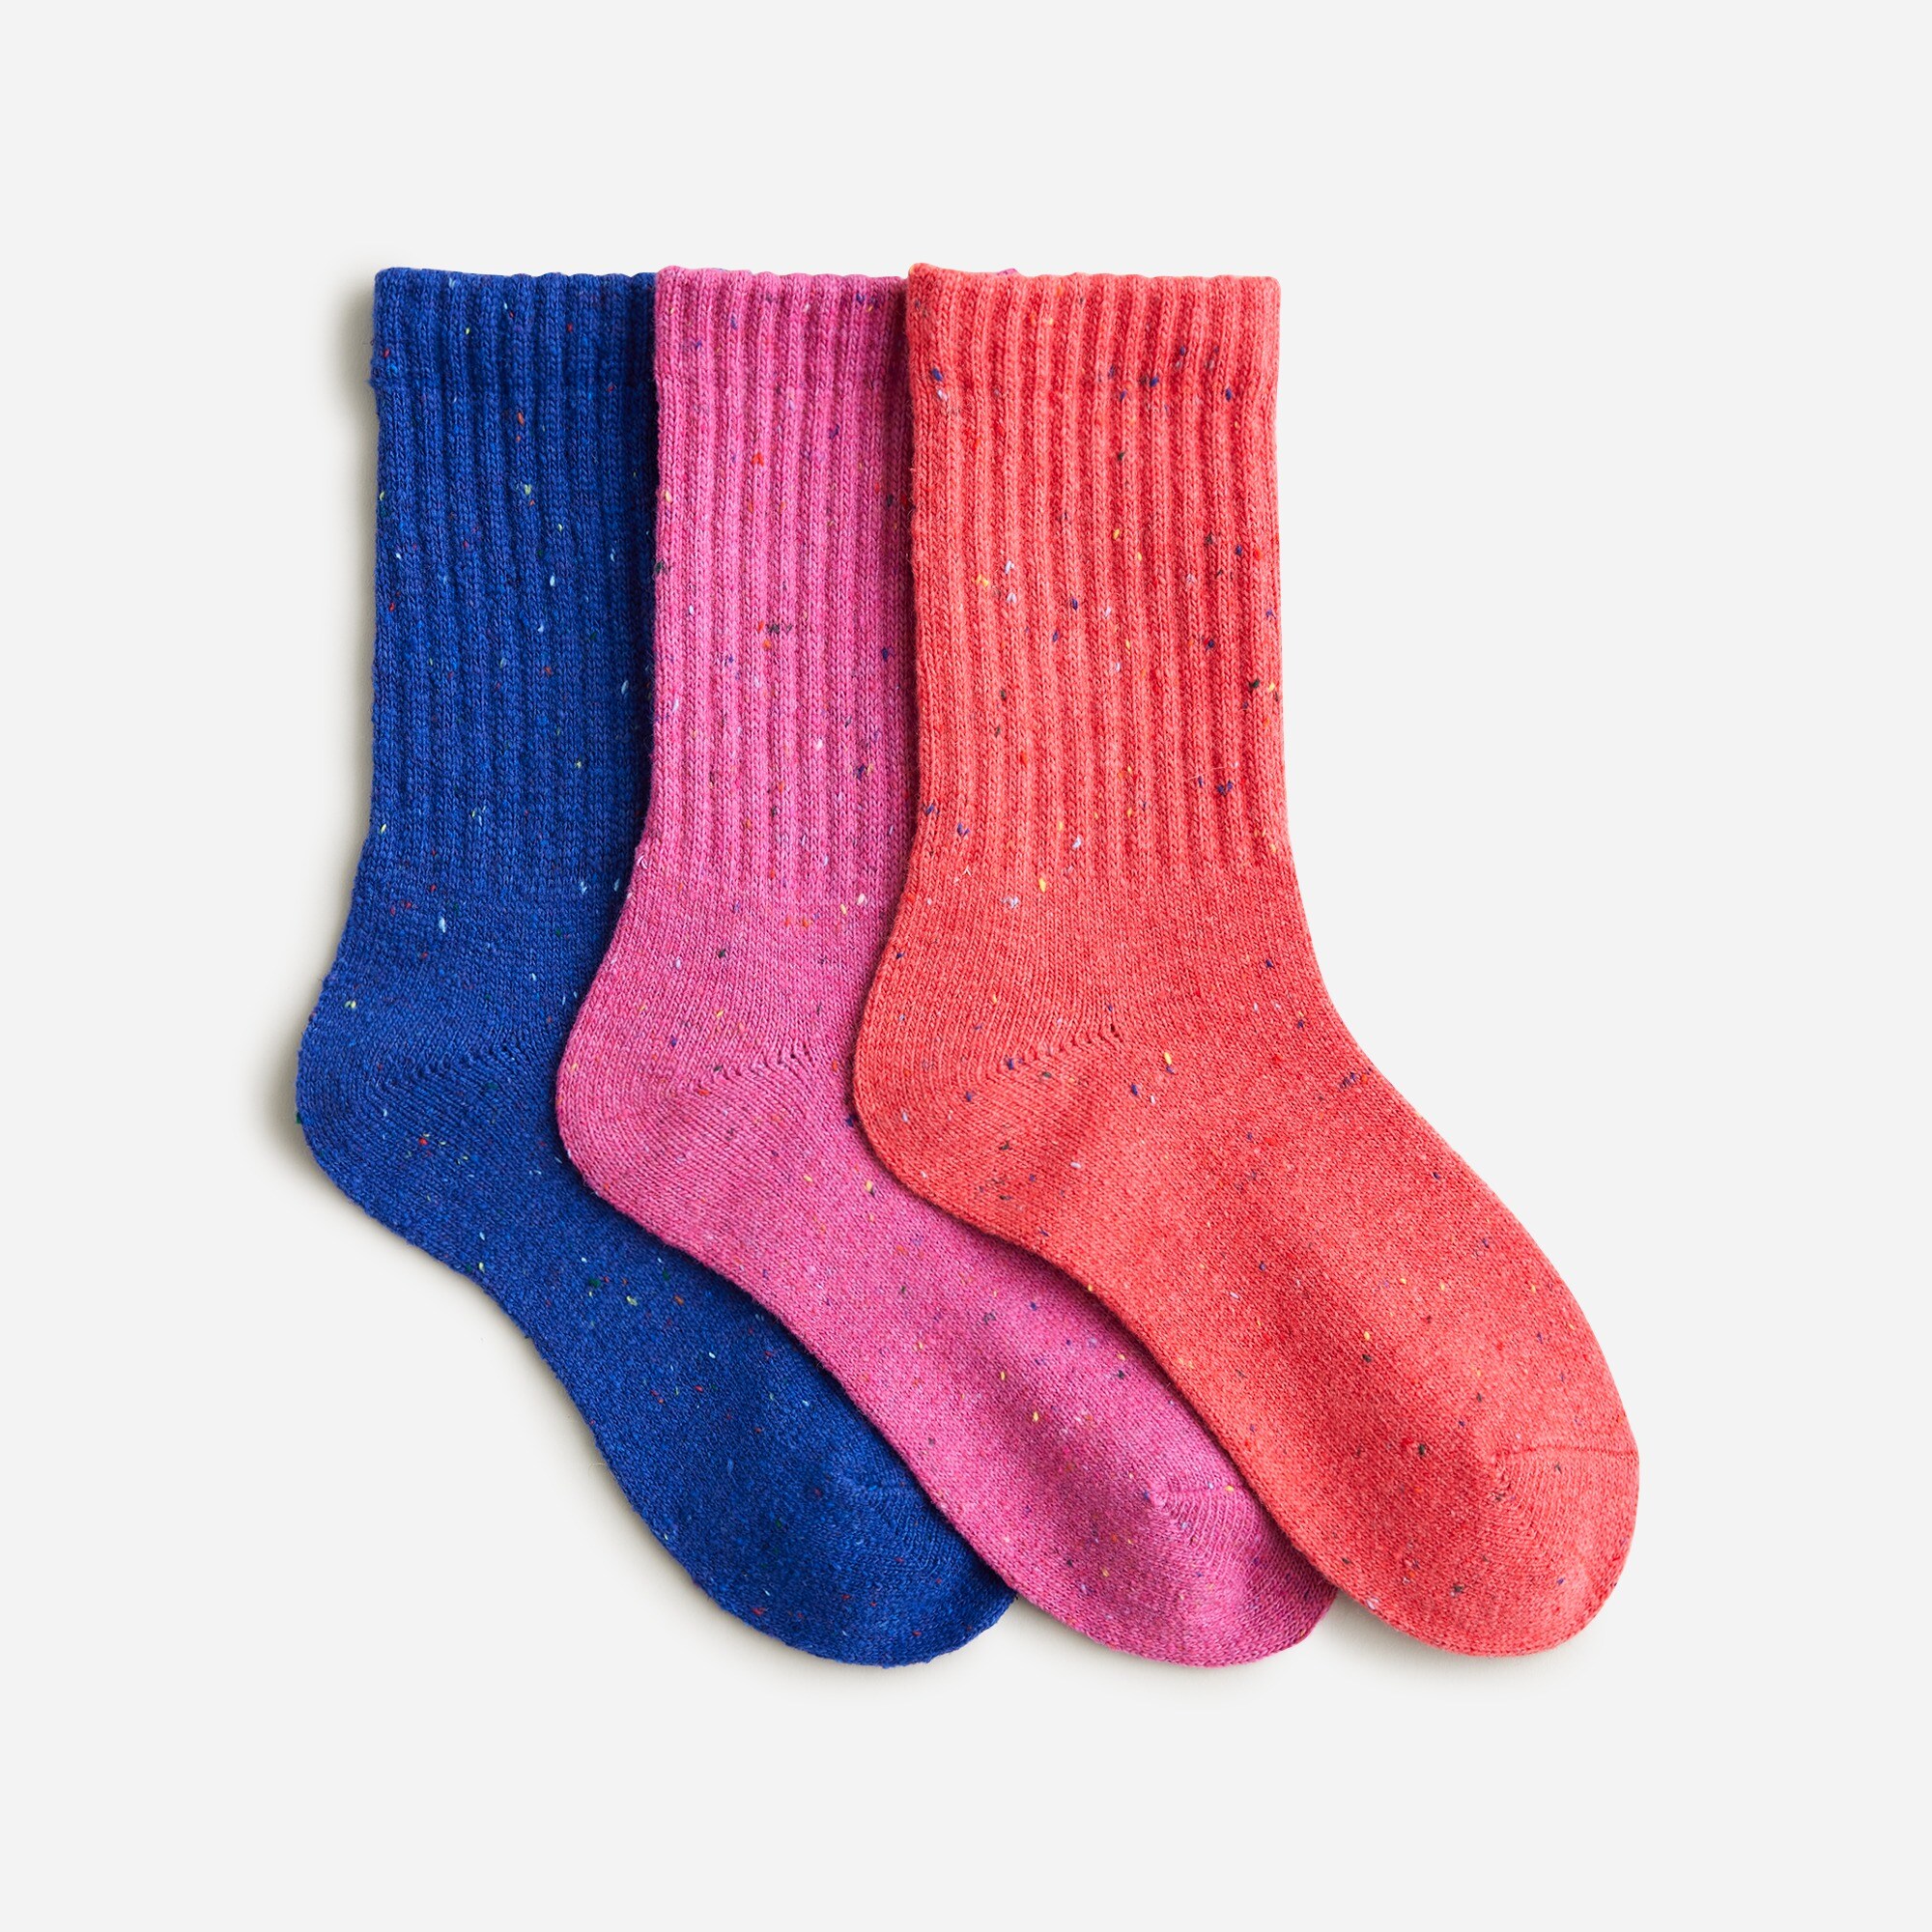  Girls' Donegal socks three-pack